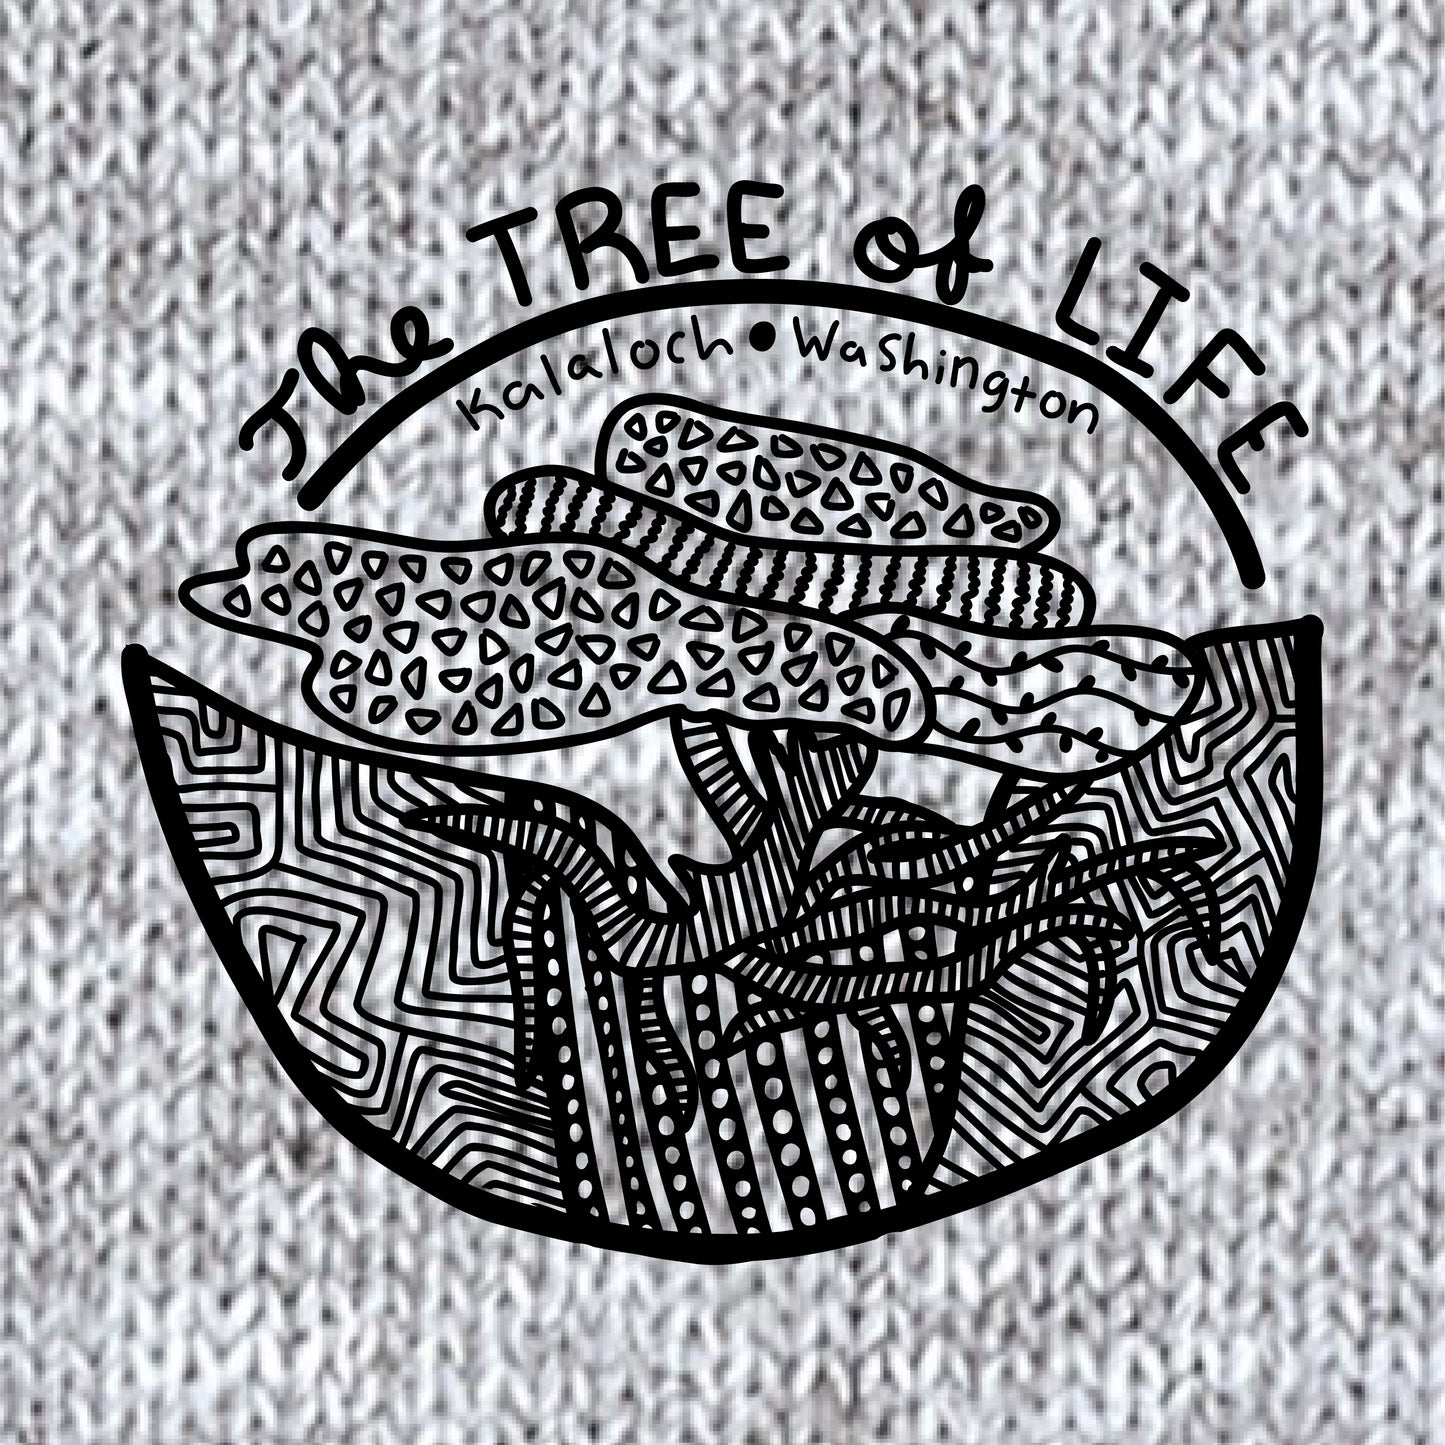 Tree of Life - Gildan Cotton Hoodie Wholesale